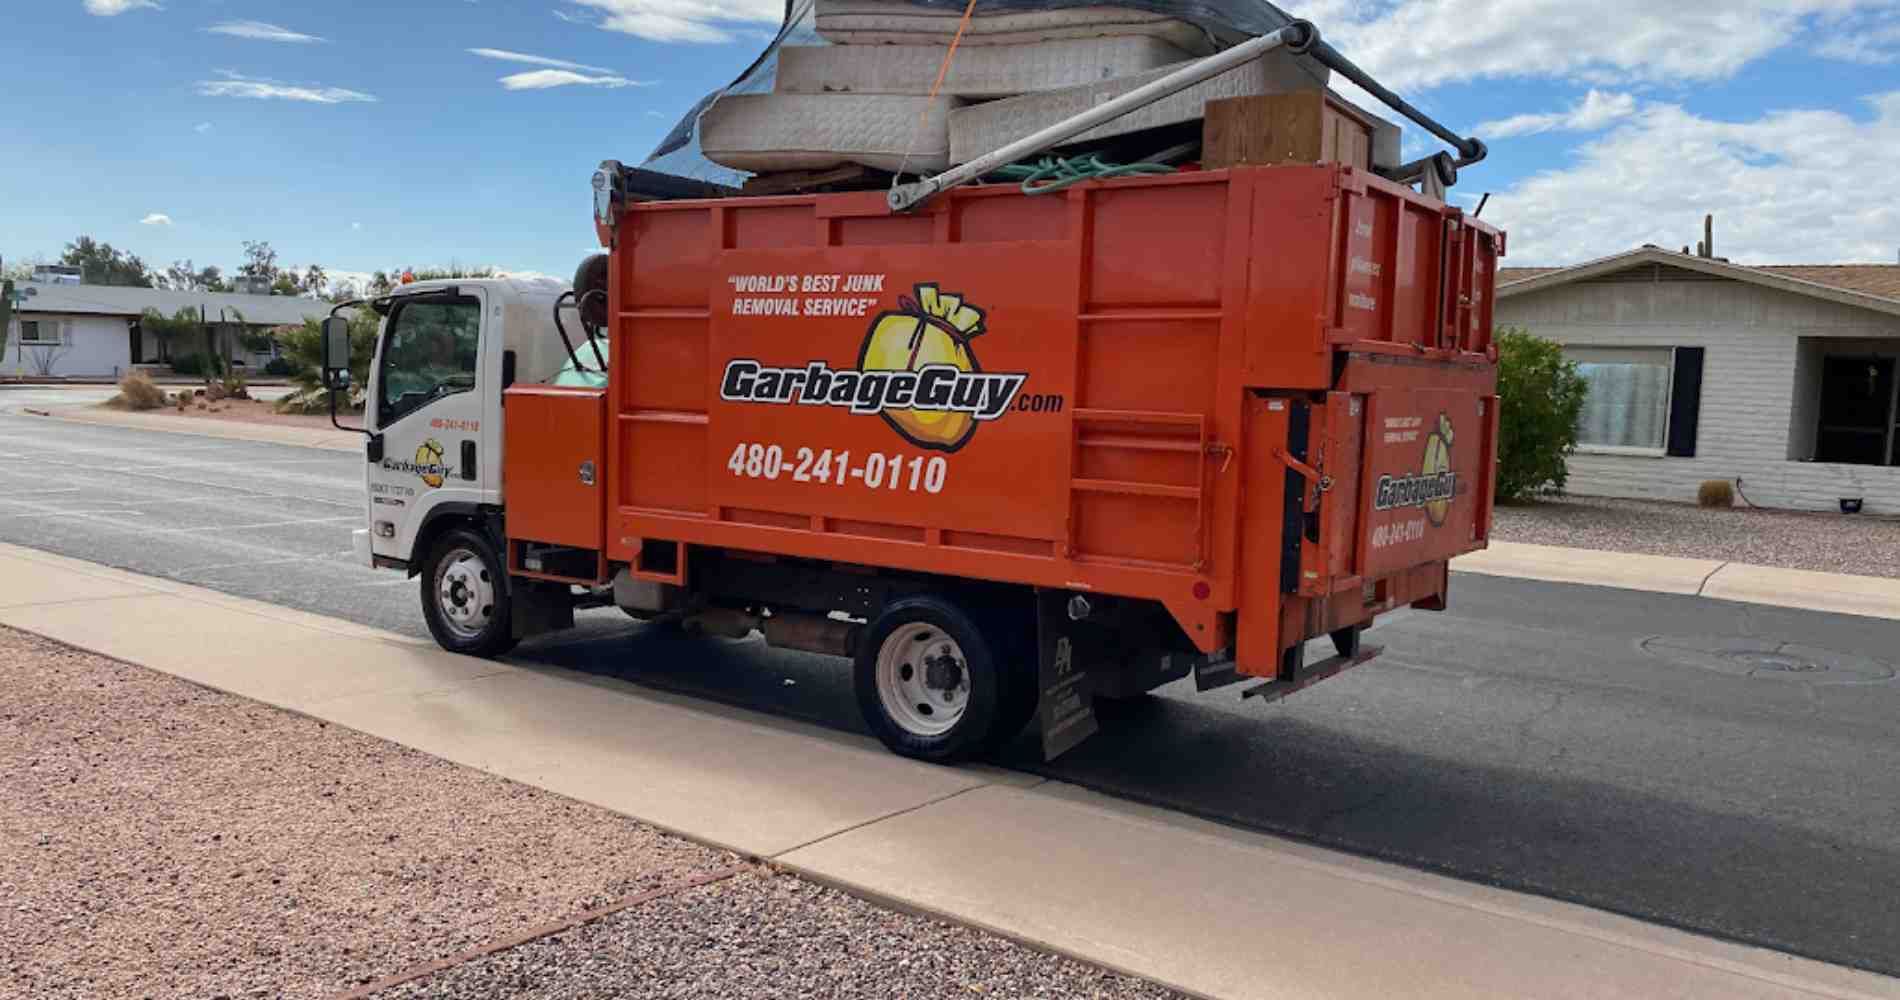 Curbside Trash Pickup in Fountain Hills, AZ